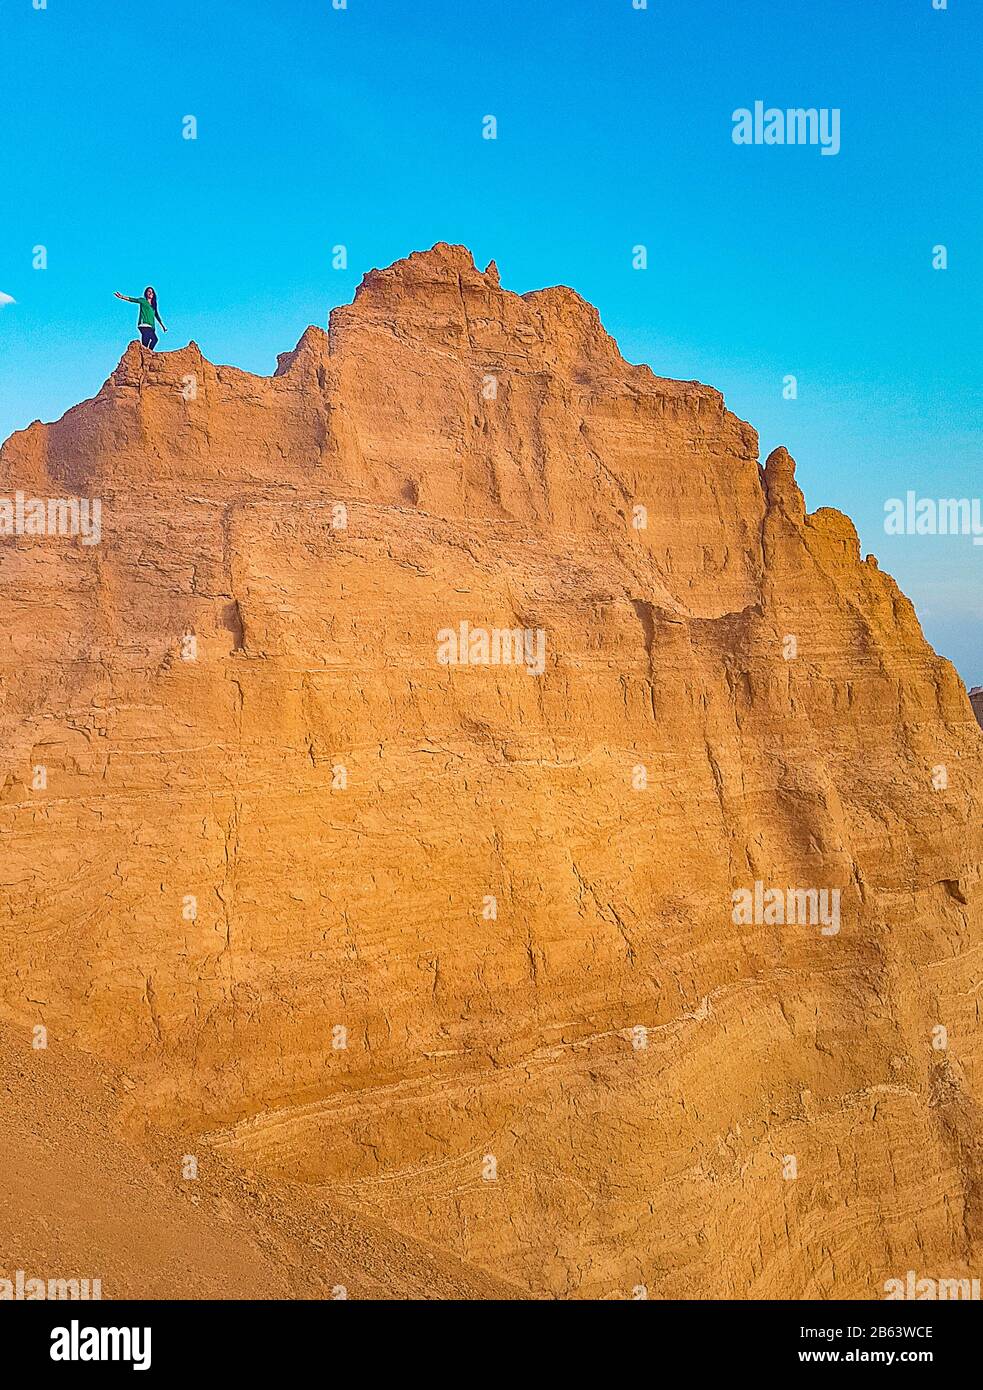 Lut desert in Iran Stock Photo